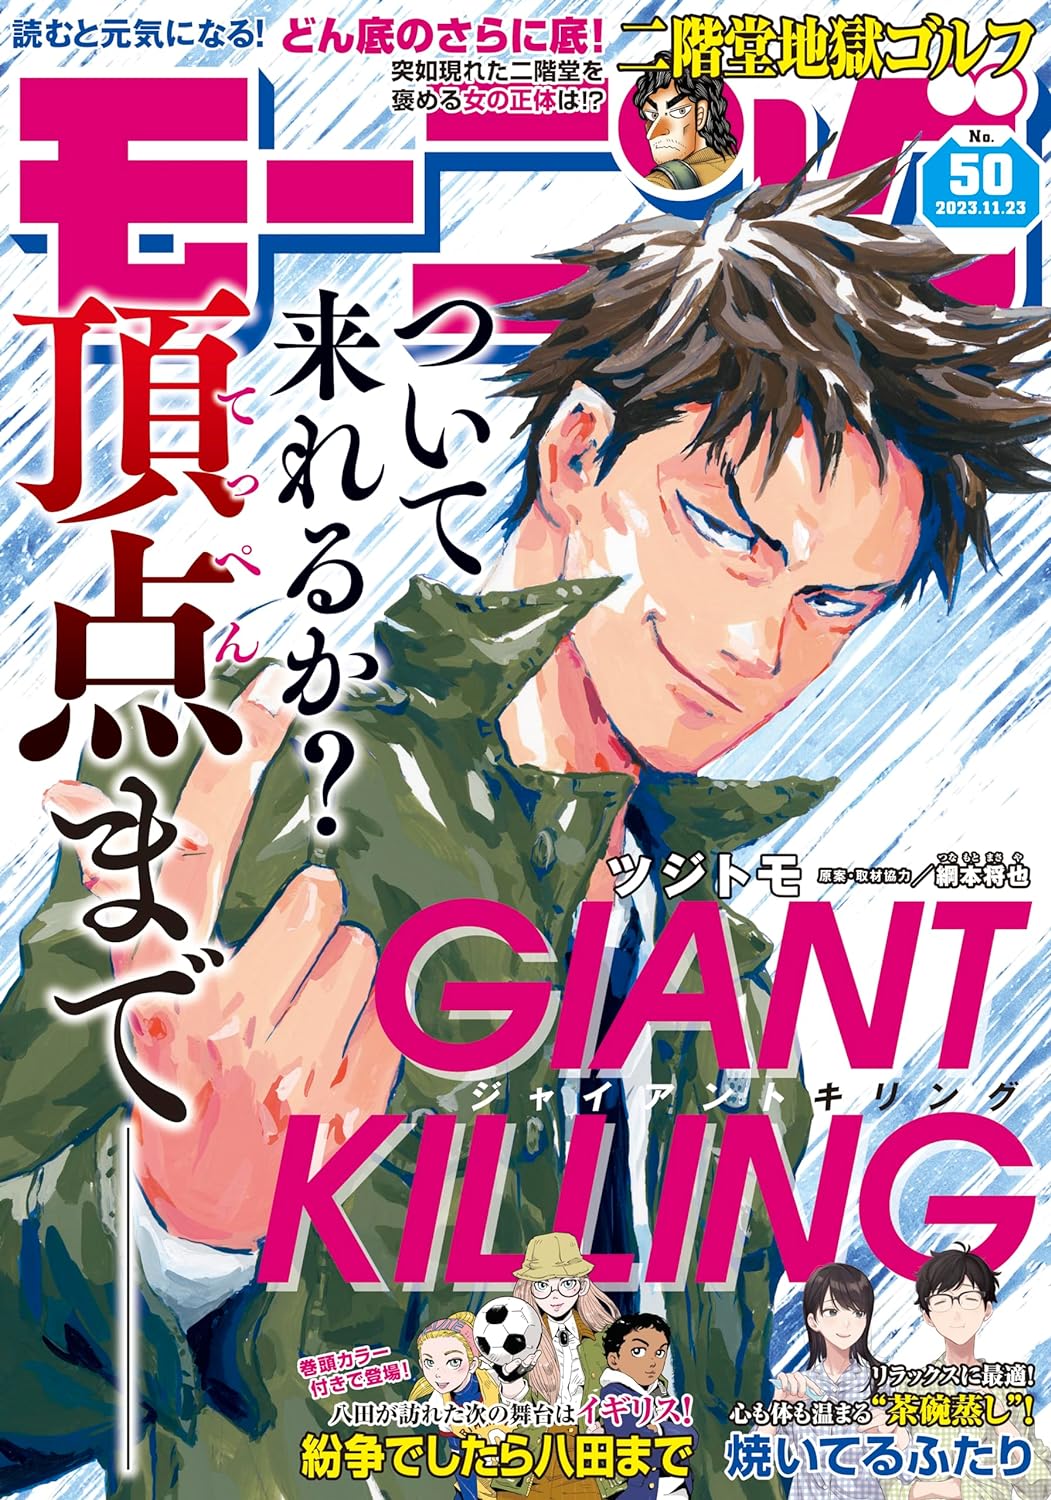 Giant Killing #20 (Kodansha USA)